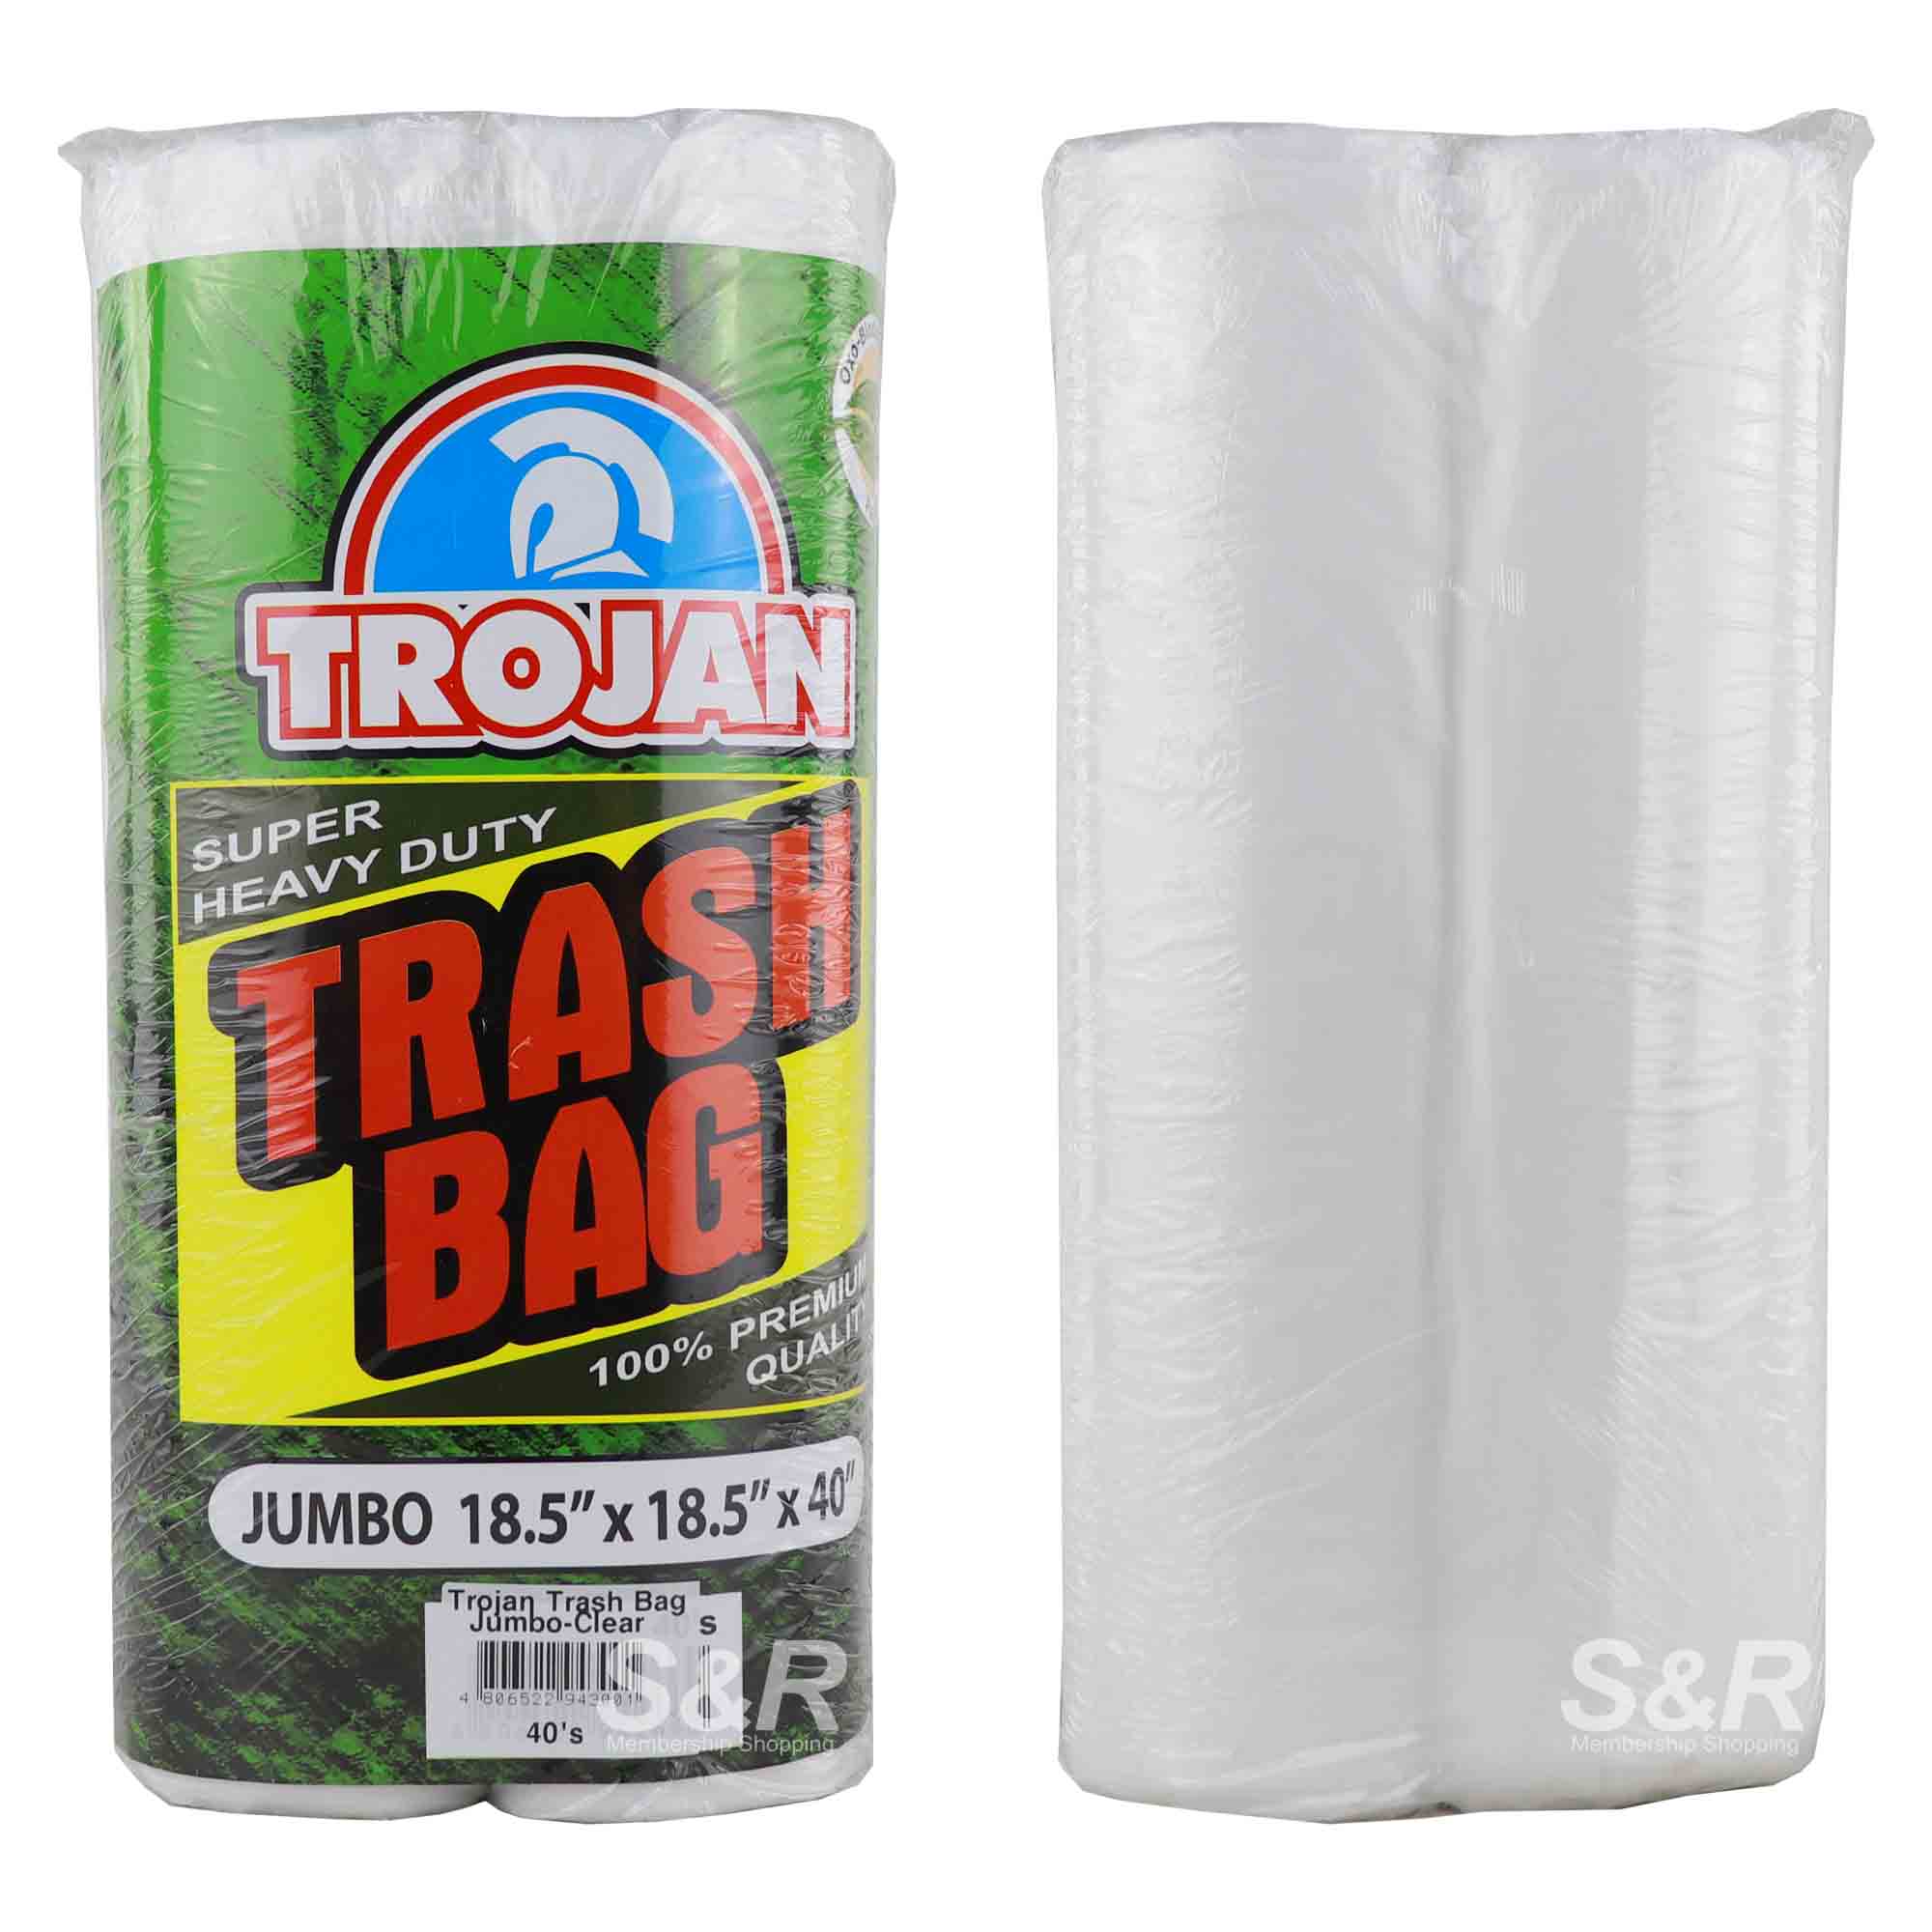 Trojan Super Heavy Duty Trash Bag Jumbo 40pcs